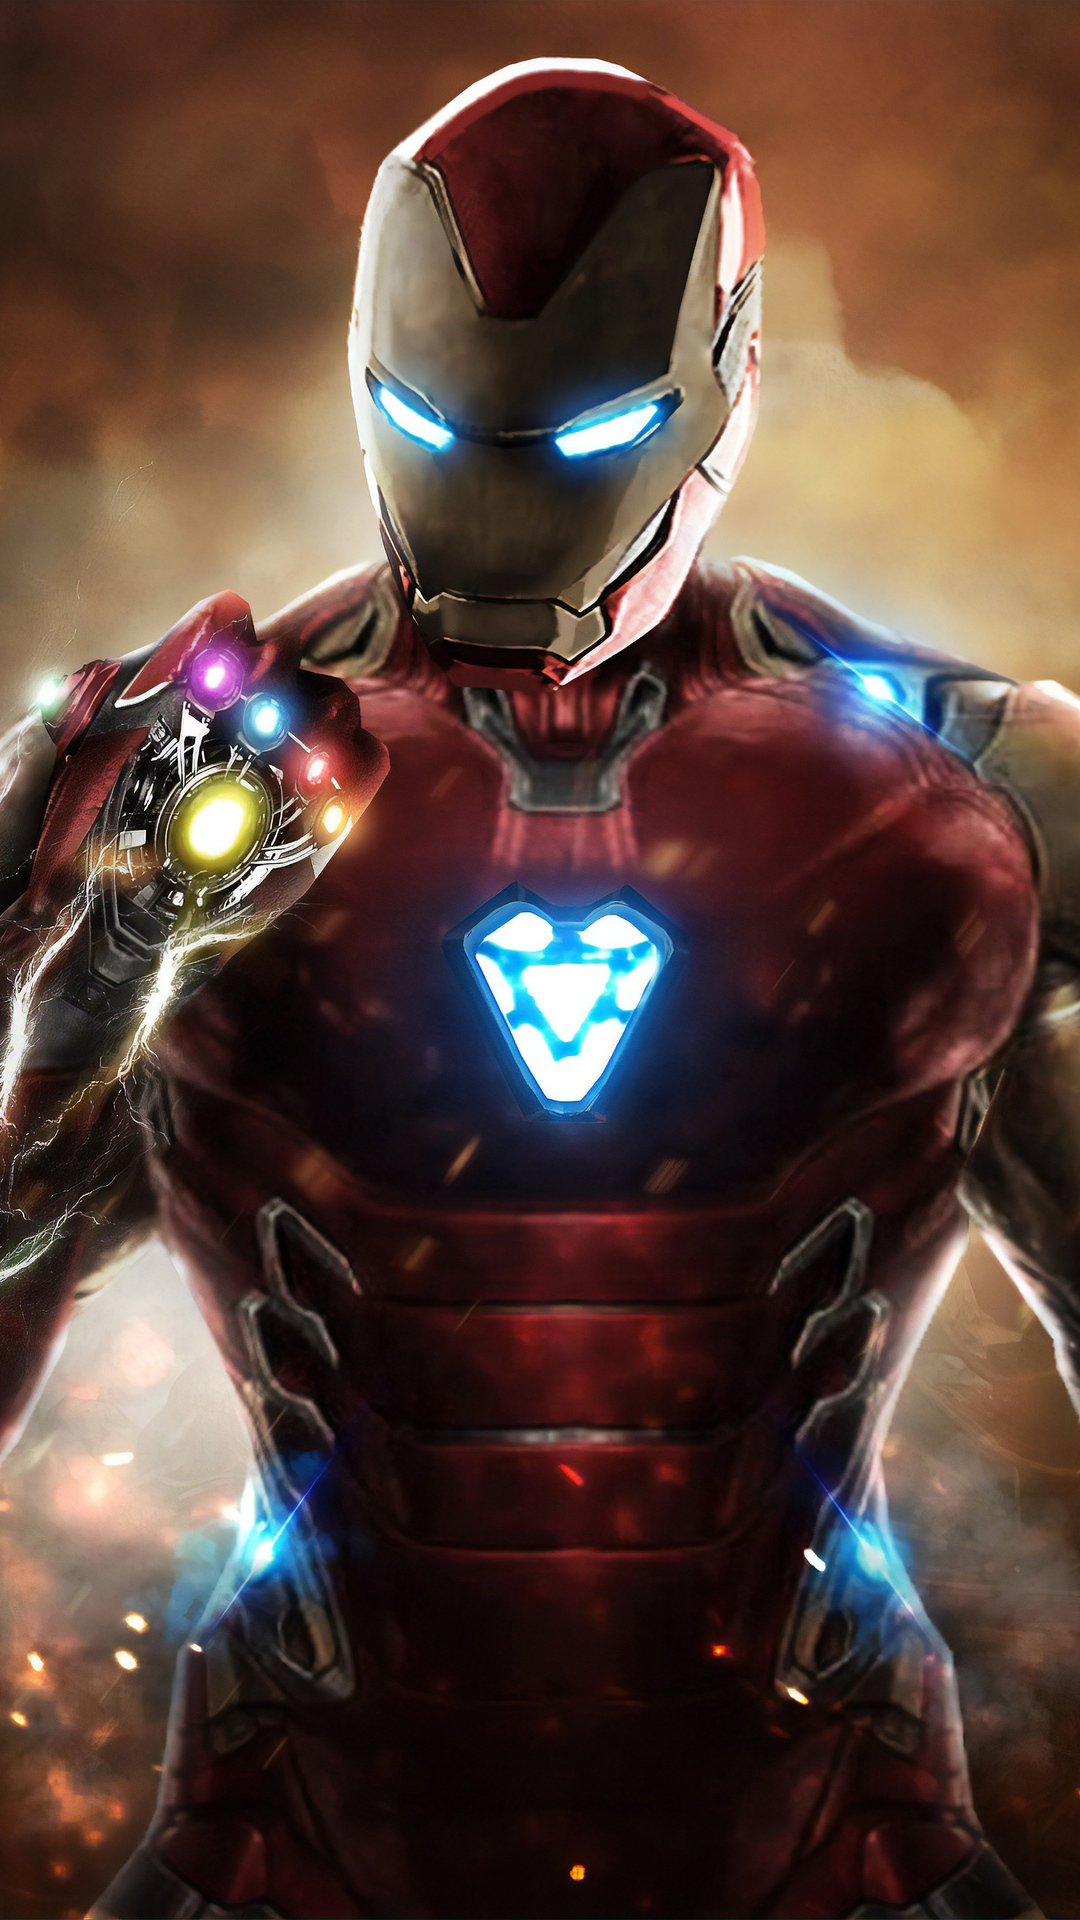 1080x1920 Iron Man Infinity Gauntlet Avengers Endgame Iphone